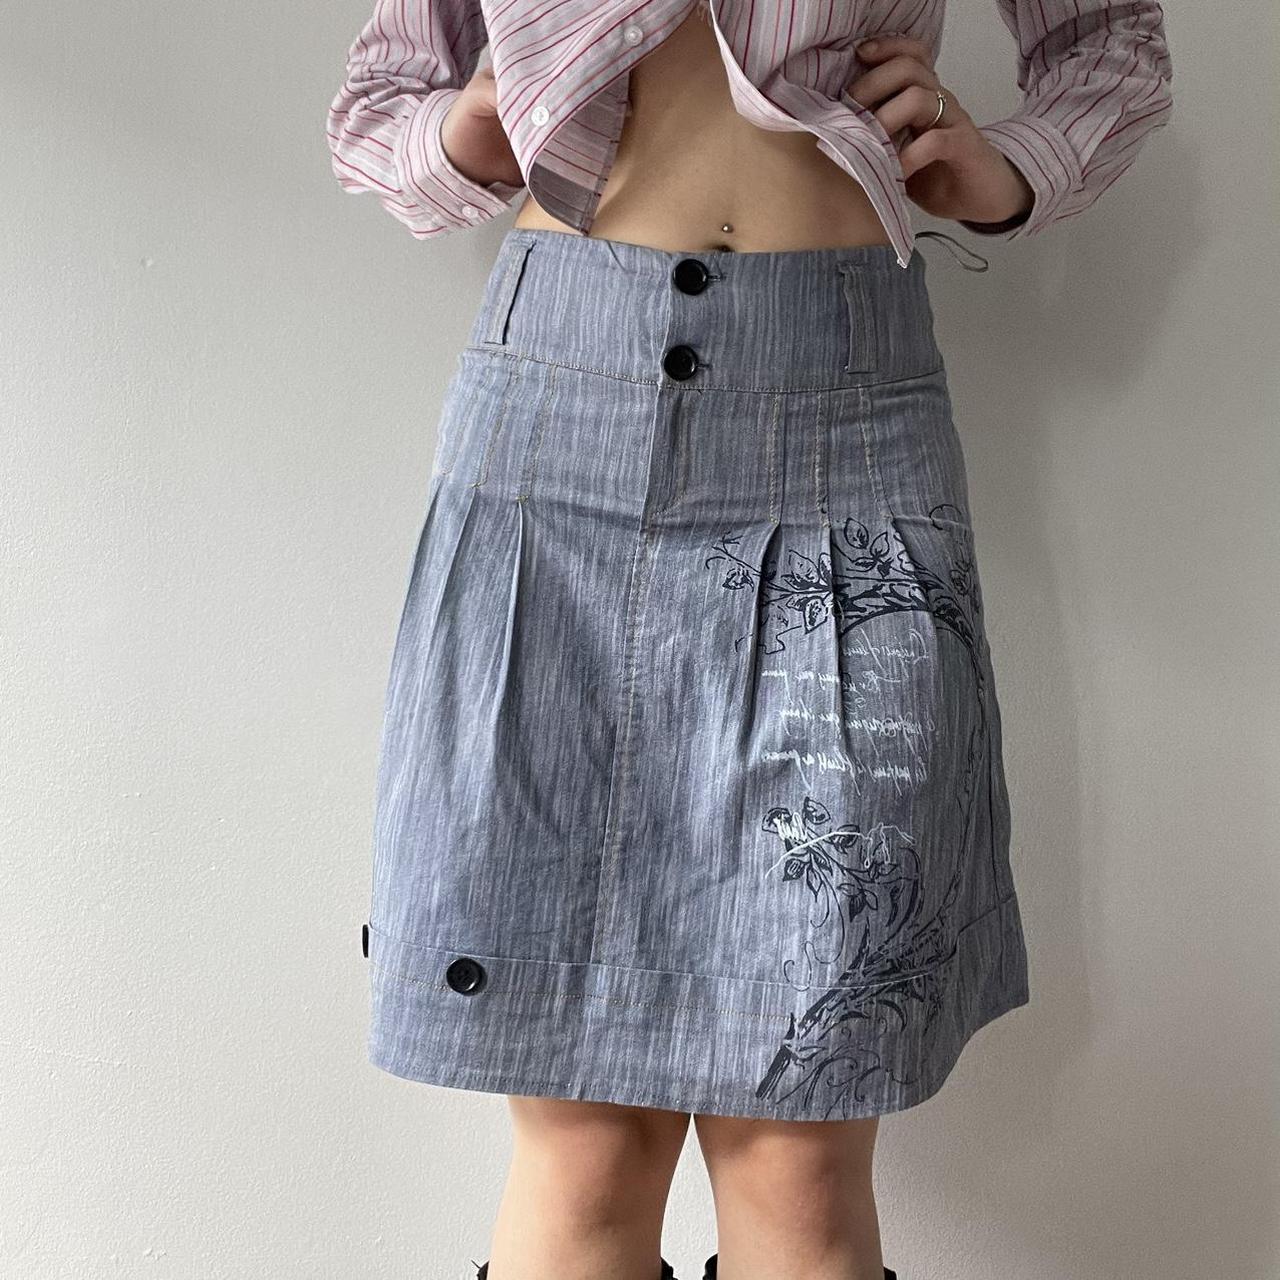 Ruffled Denim Skirt, Girls Sewing Pattern - 2 to 8 yrs - Sew Crafty Me